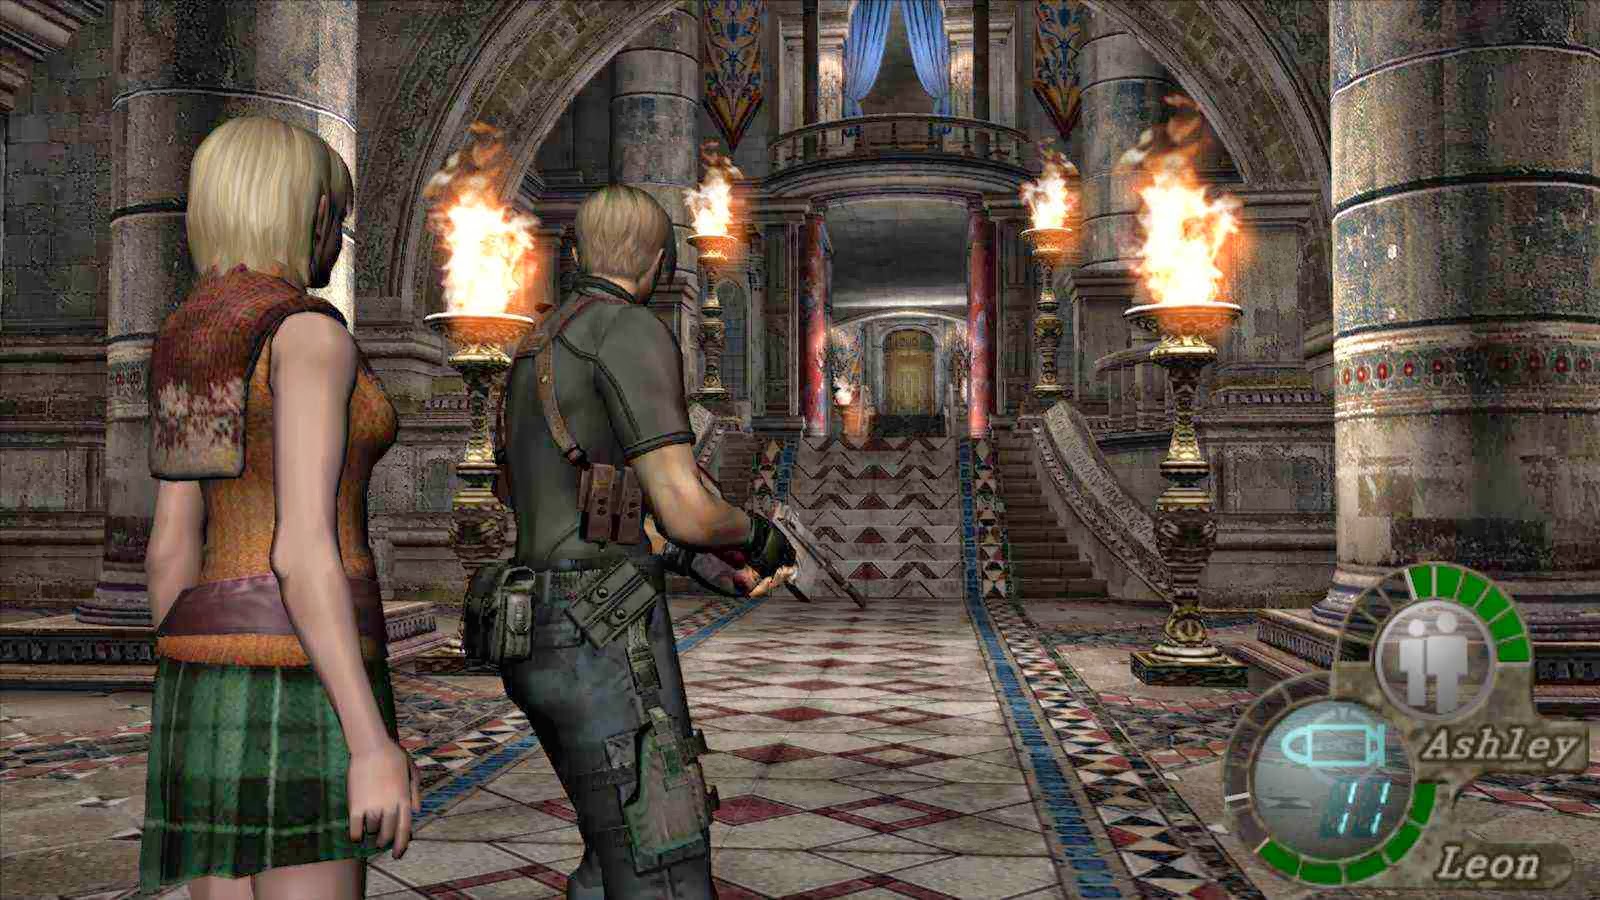 ... PC: Resident Evil 4 PC Download, Resident Evild 4 PC Download Full